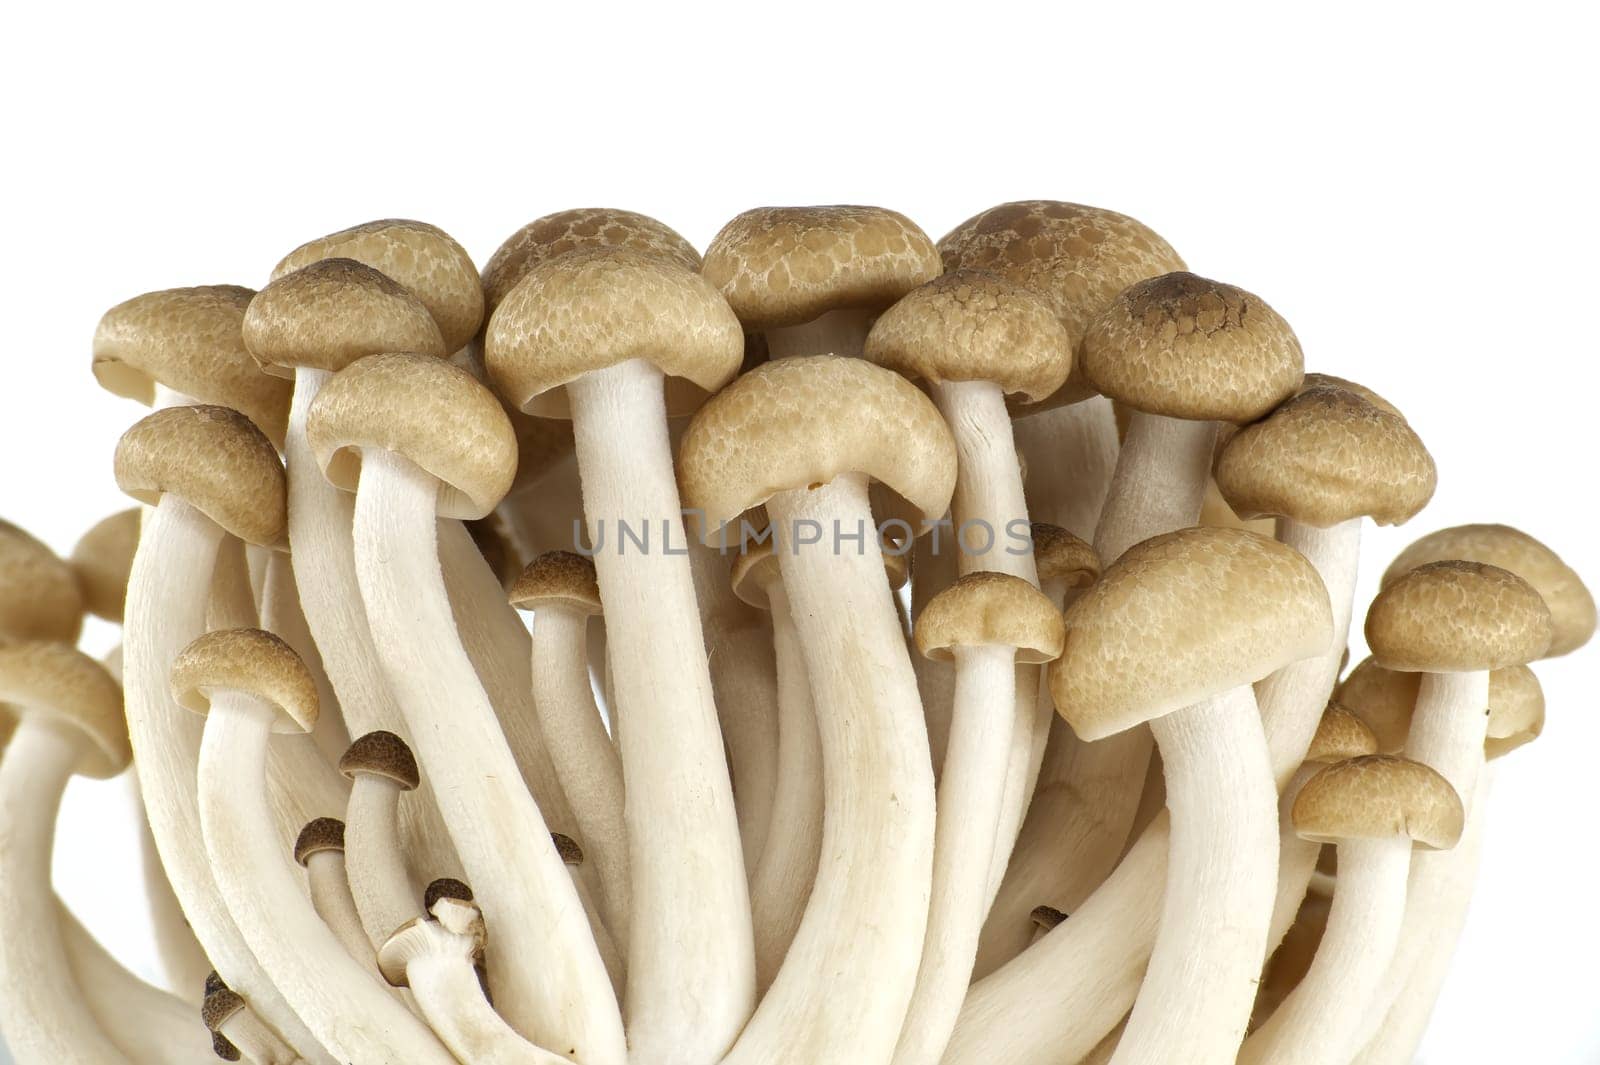 Shimeji (beech) mushrooms isolated on white background. Hypsizygus tessellatus type of edible mushroom that grows on beech trees